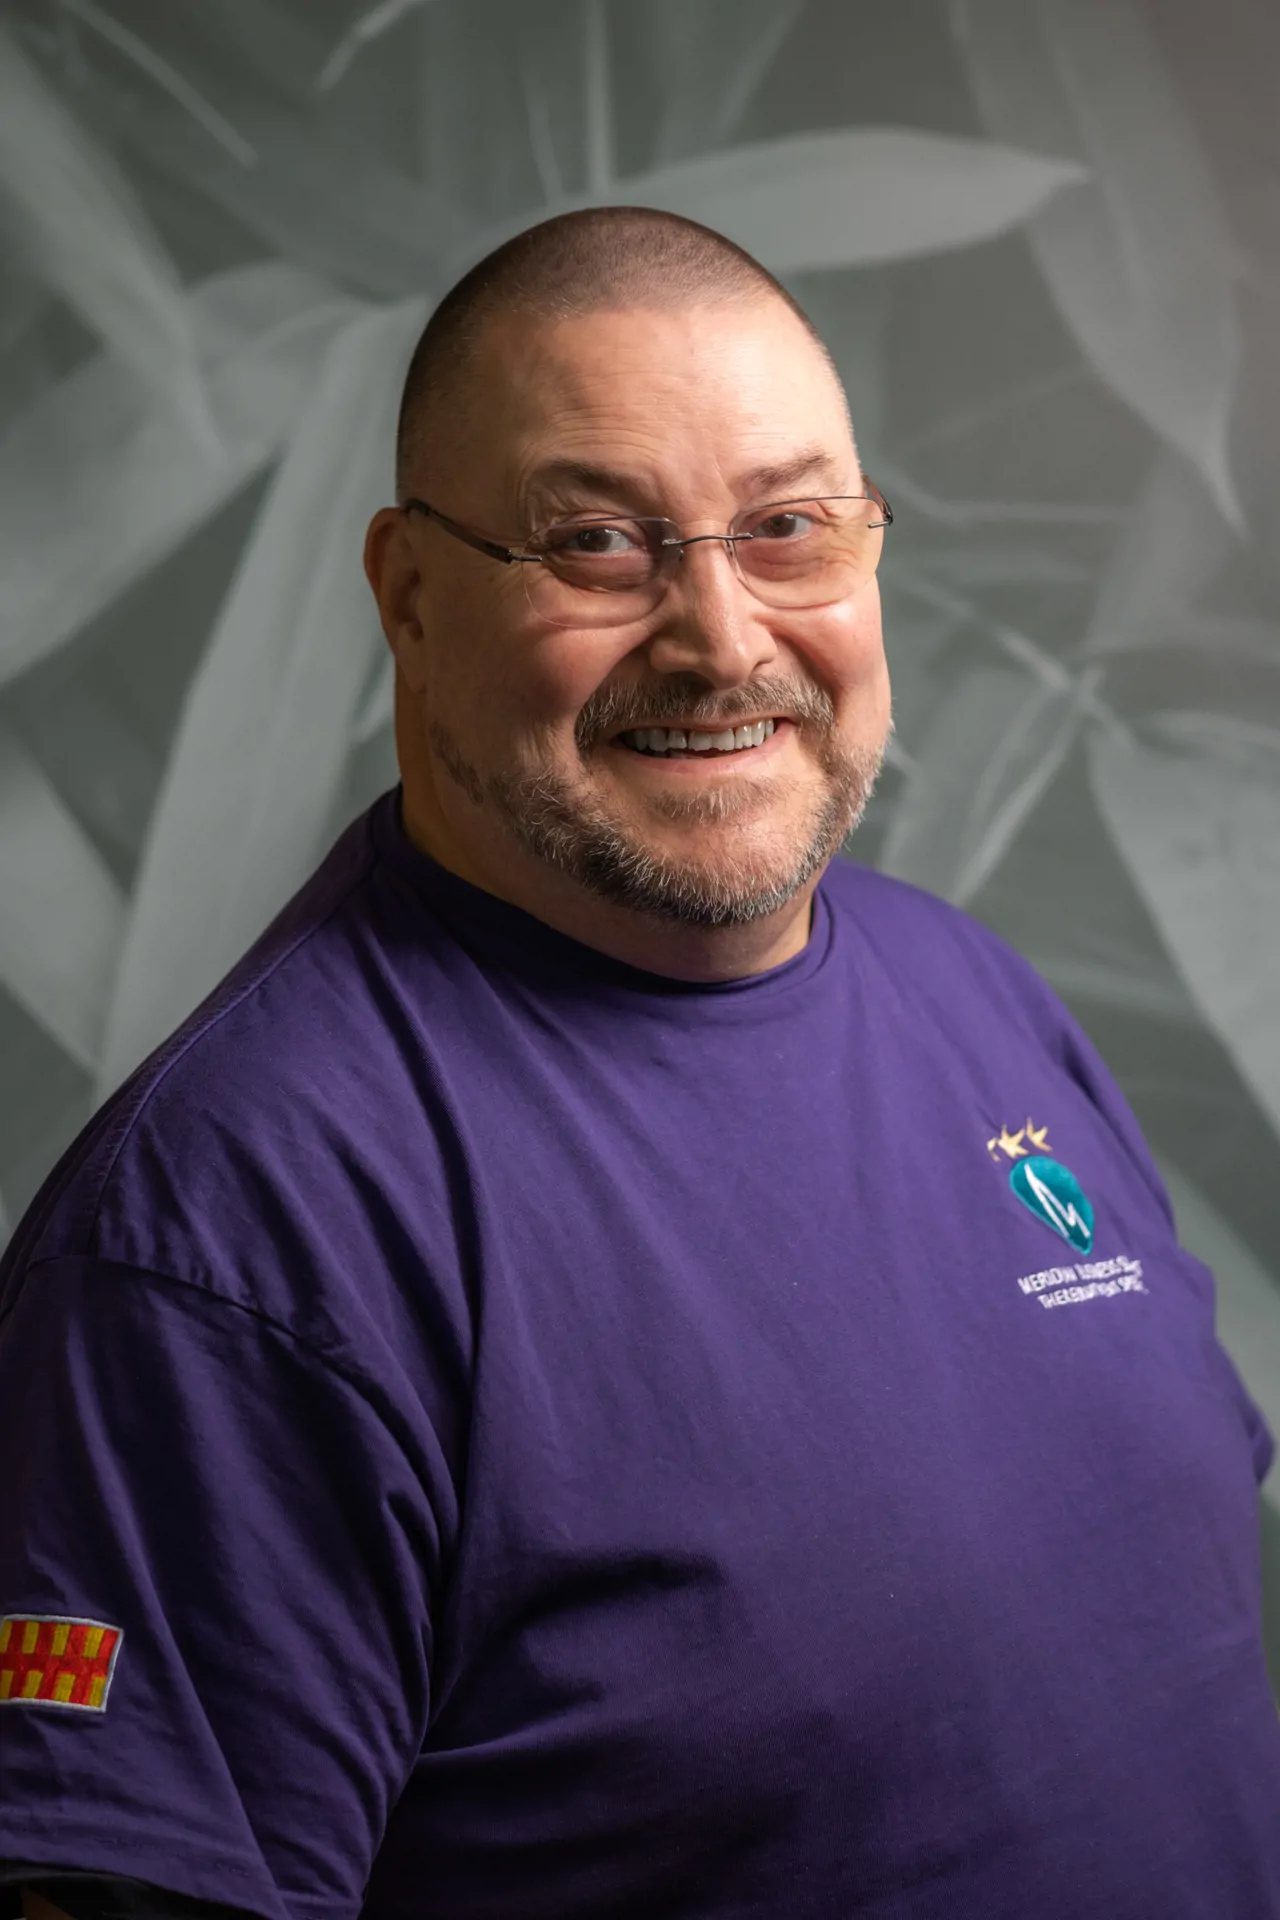 Headshot photograph of Meridian CEO Derek Skelton against a patterned background